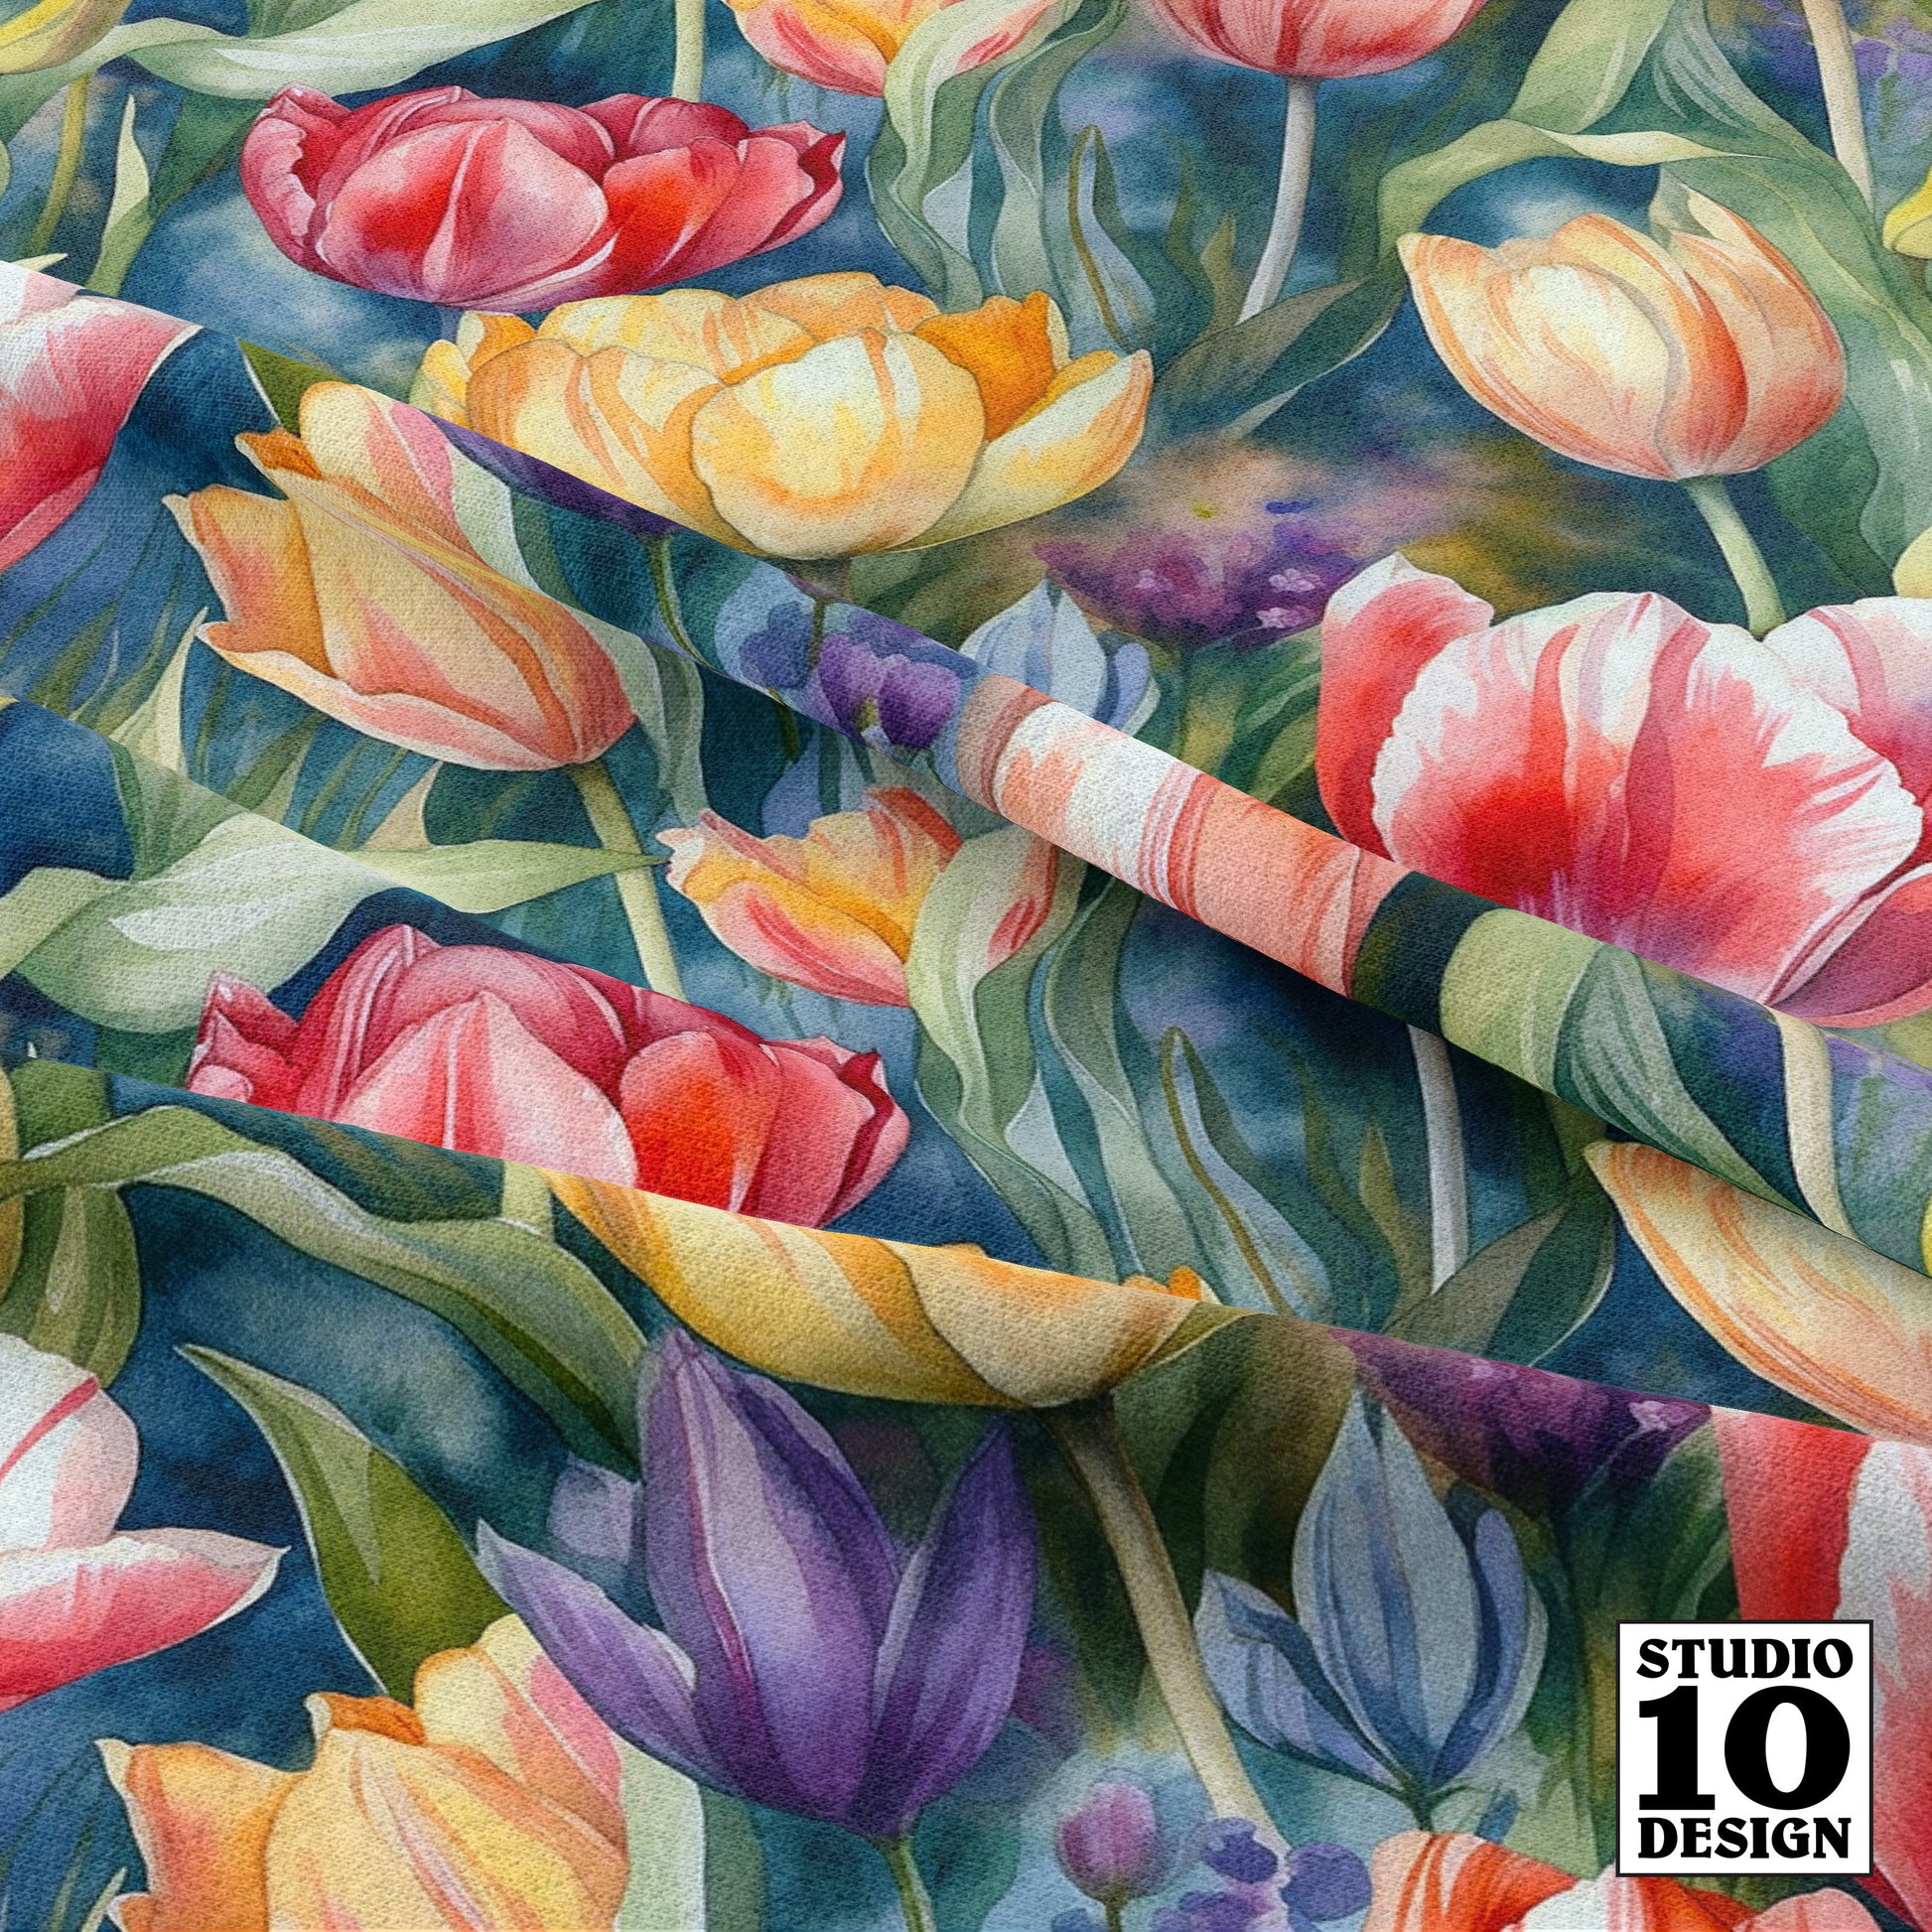 Vibrant Rhapsody Watercolor Tulips Printed Fabric by Studio Ten Design